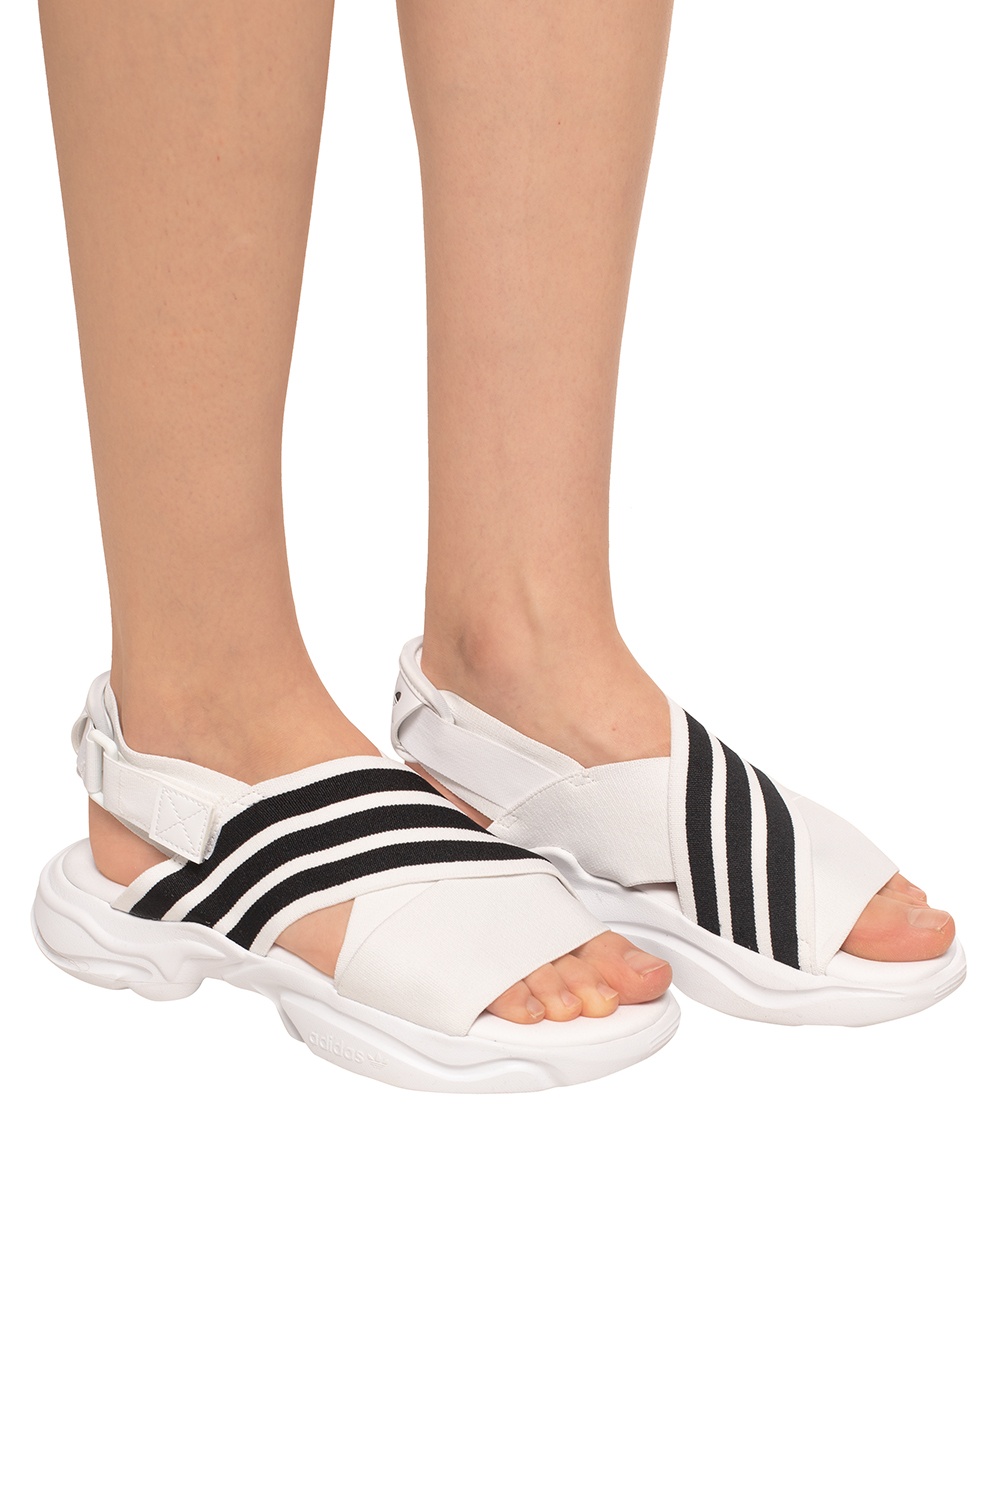 adidas magmur sandals